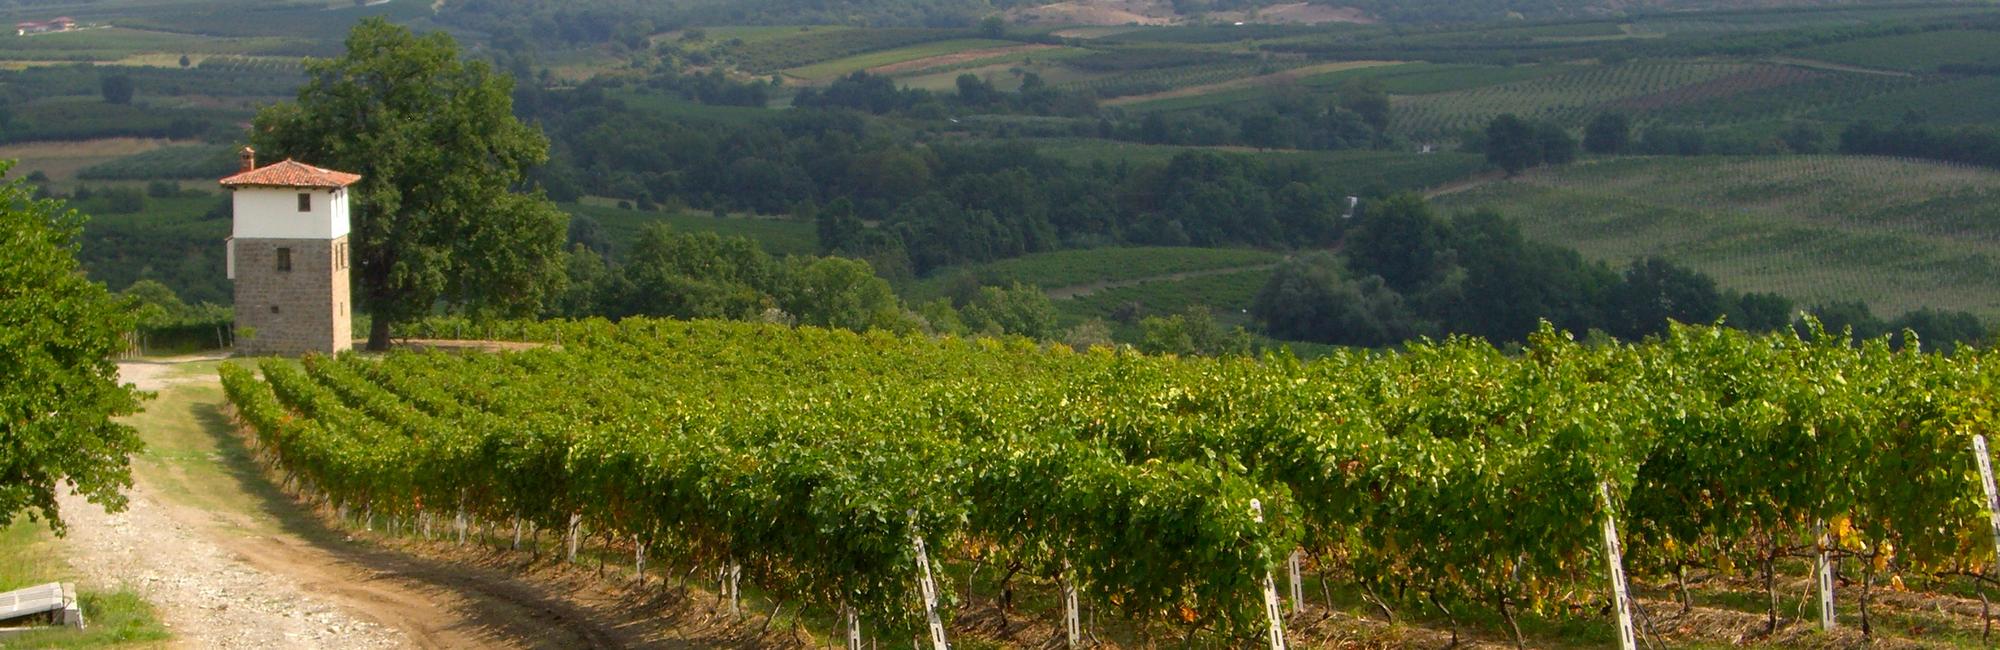 Northern Greece: Kir Yiannis vineyard